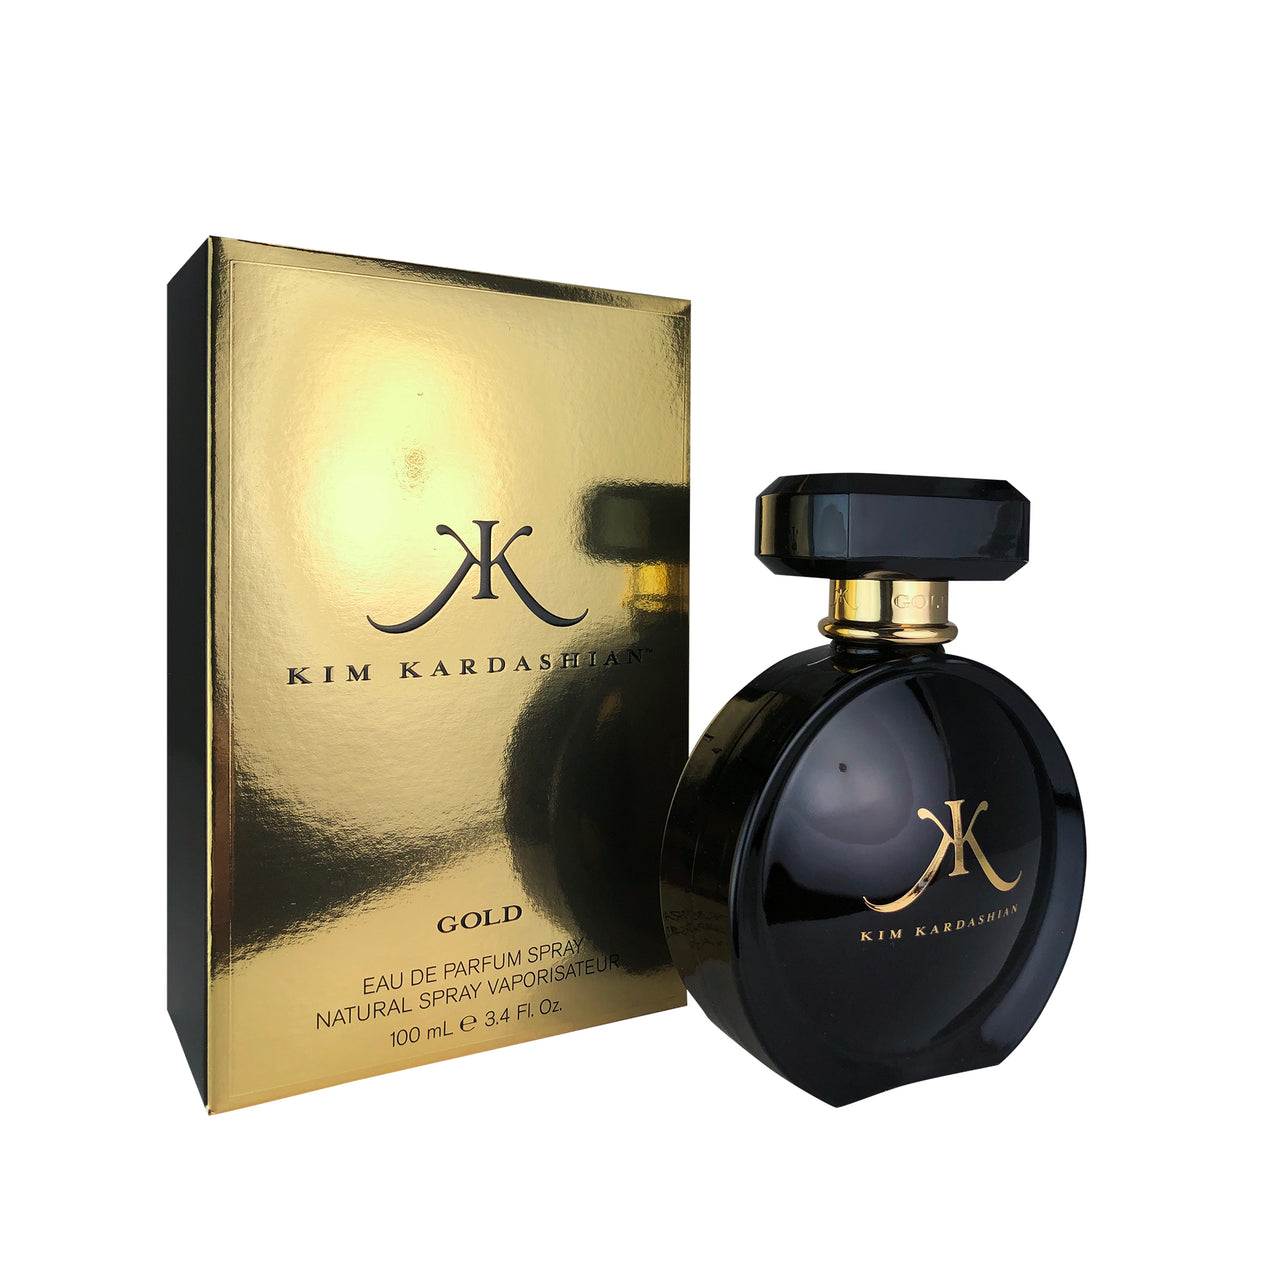 Kim Kardashian Gold for Women 3.4 oz Eau de Parfum Spray